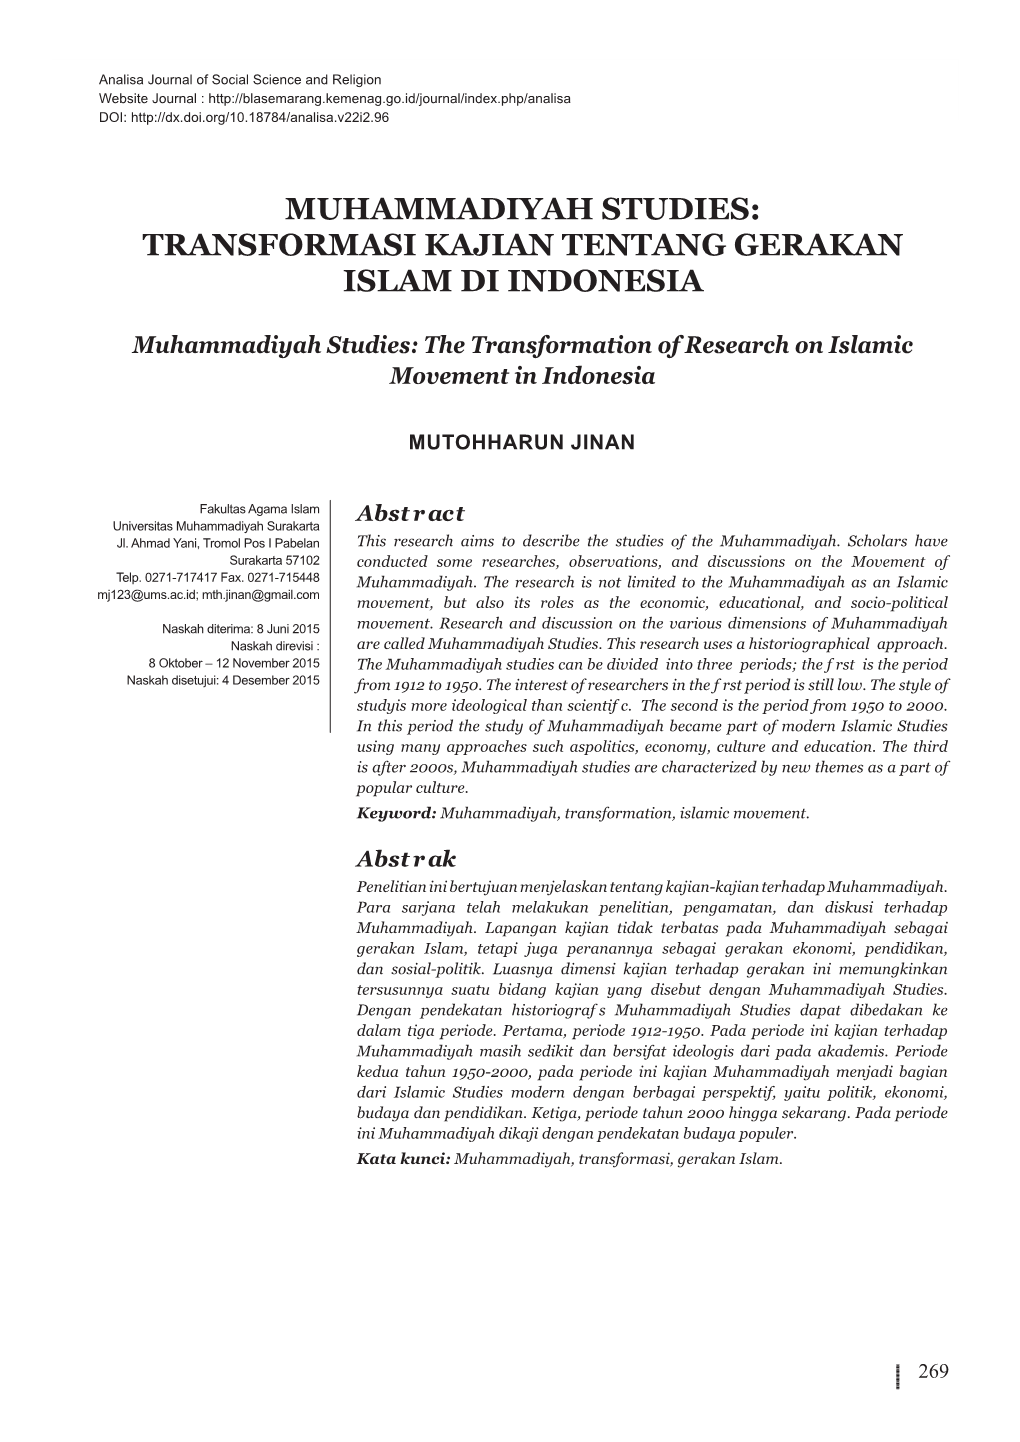 Muhammadiyah Studies: Transformasi Kajian Tentang Gerakan Islam Di Indonesia